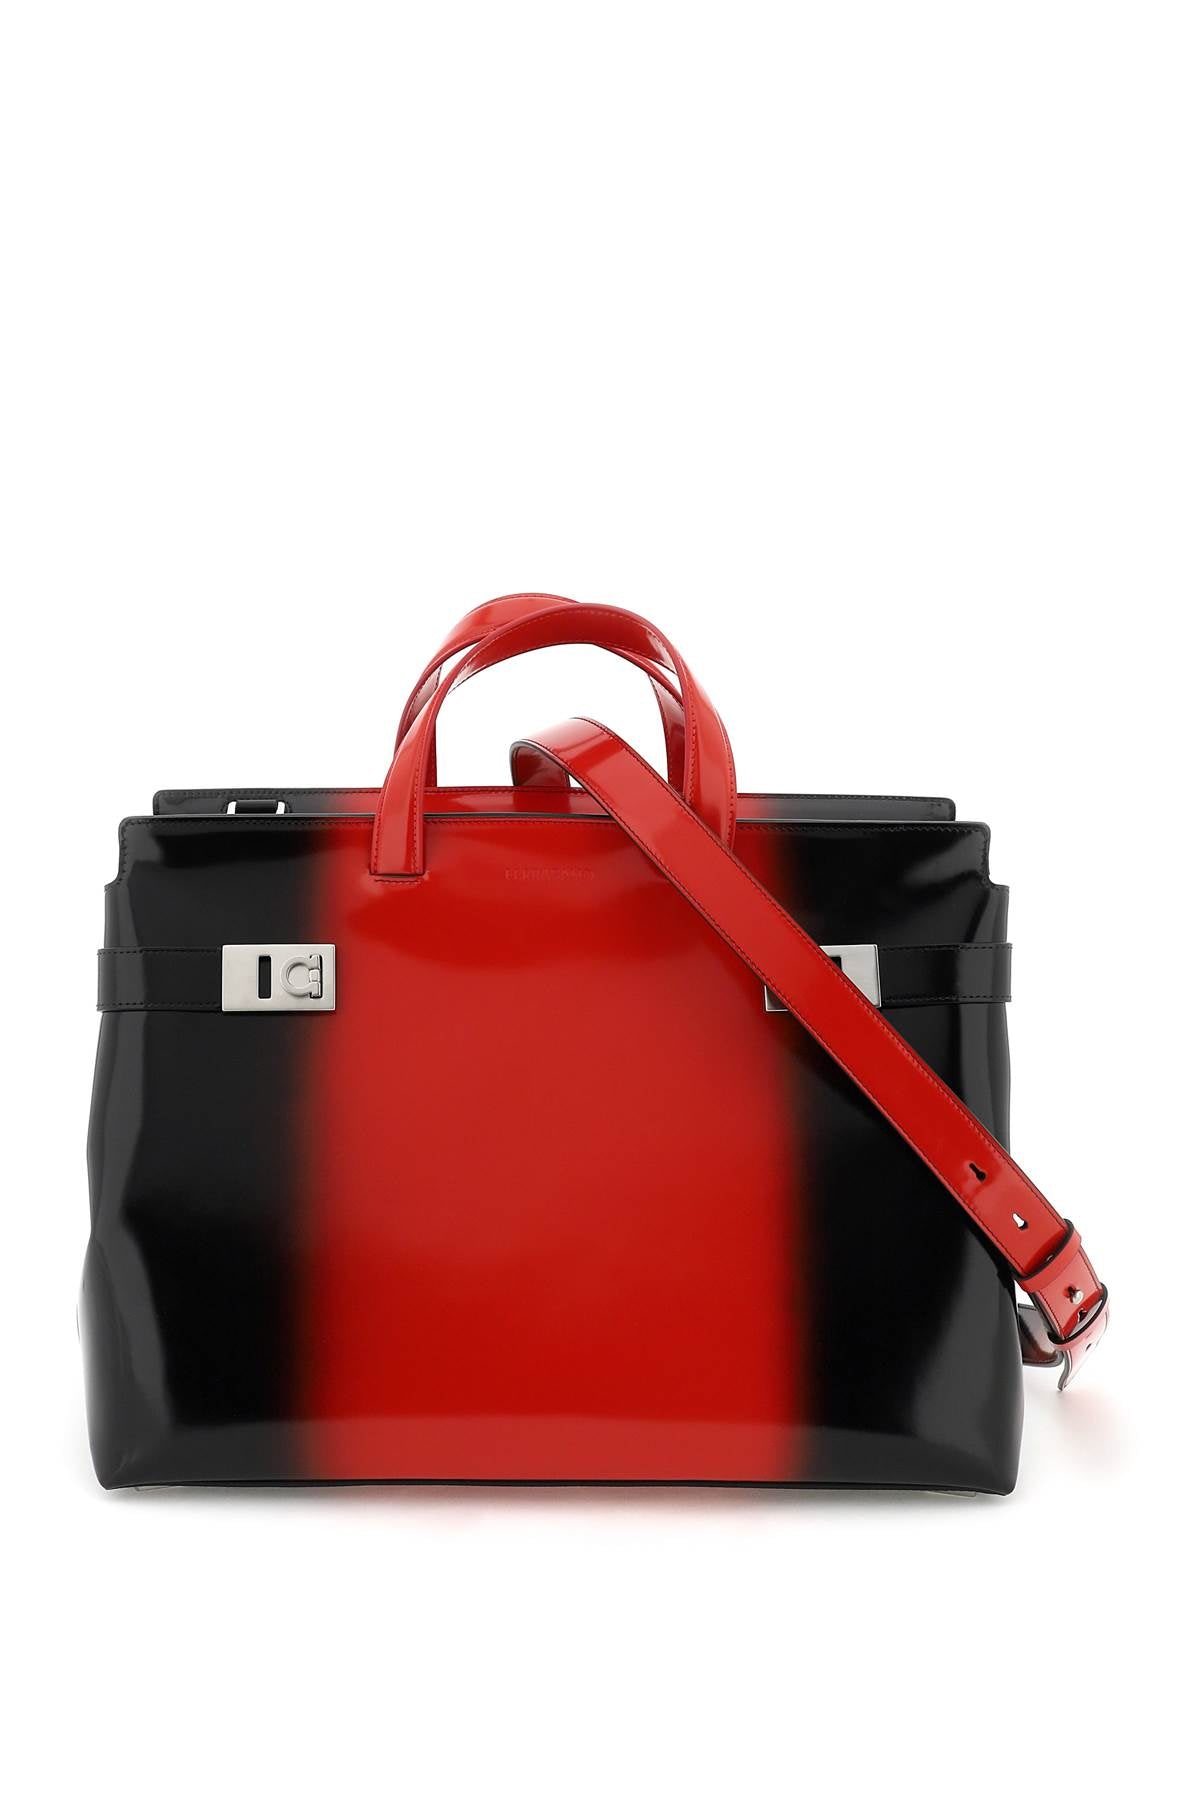 FERRAGAMO Gradient Leather Tote Handbag for Men - Multicolor